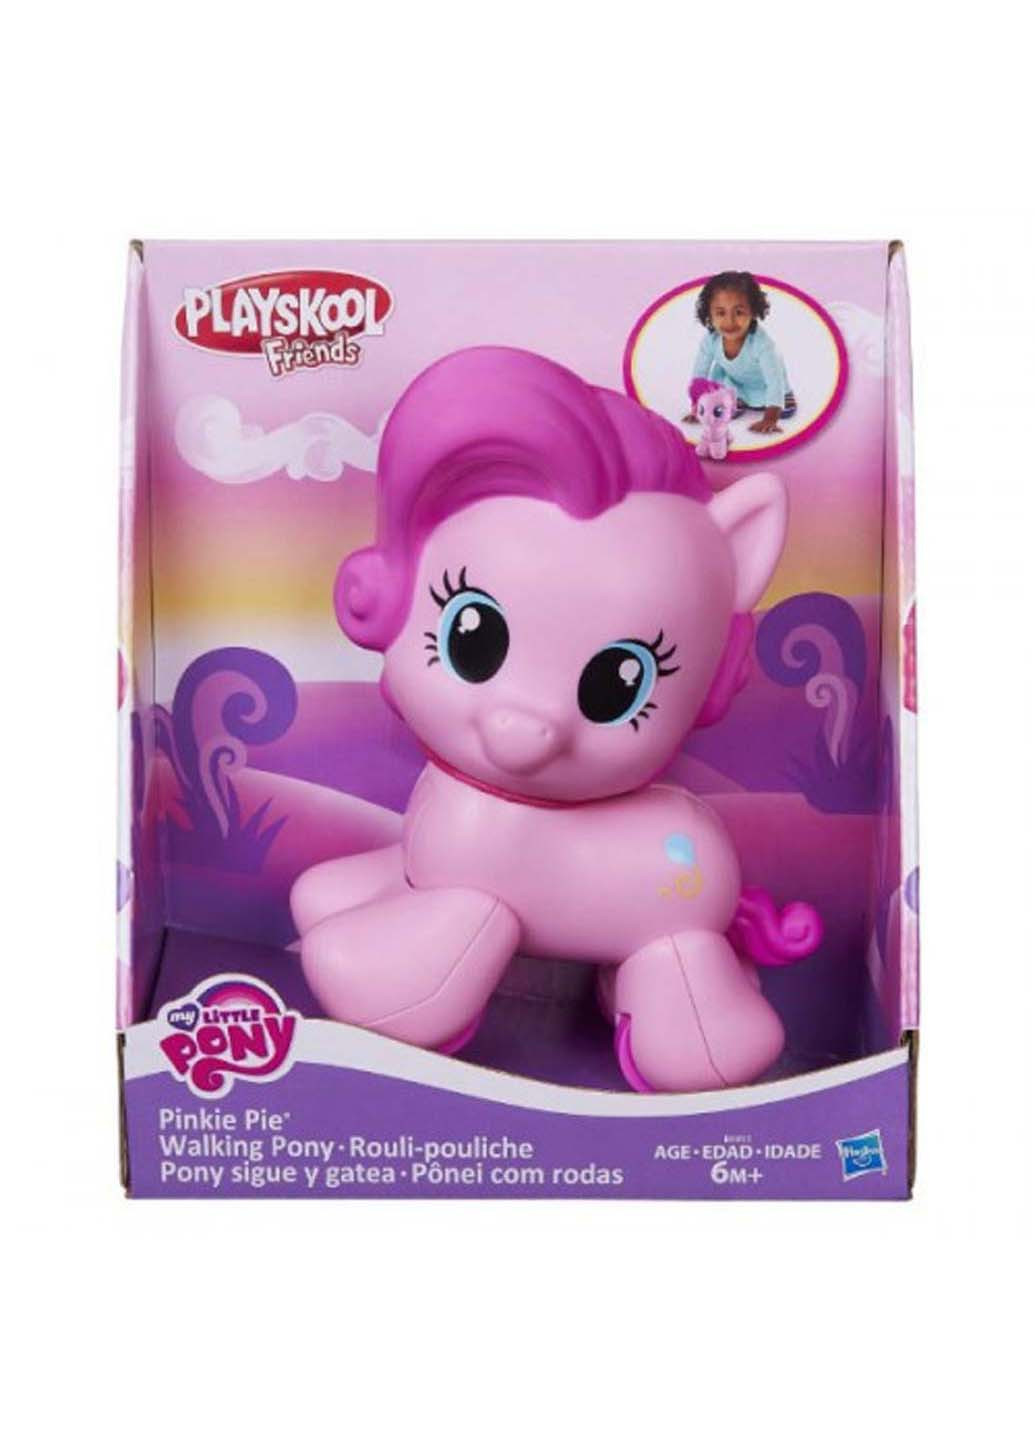 Пони на колесиках Playskool Friends Пинки Пай Hasbro (260023862)